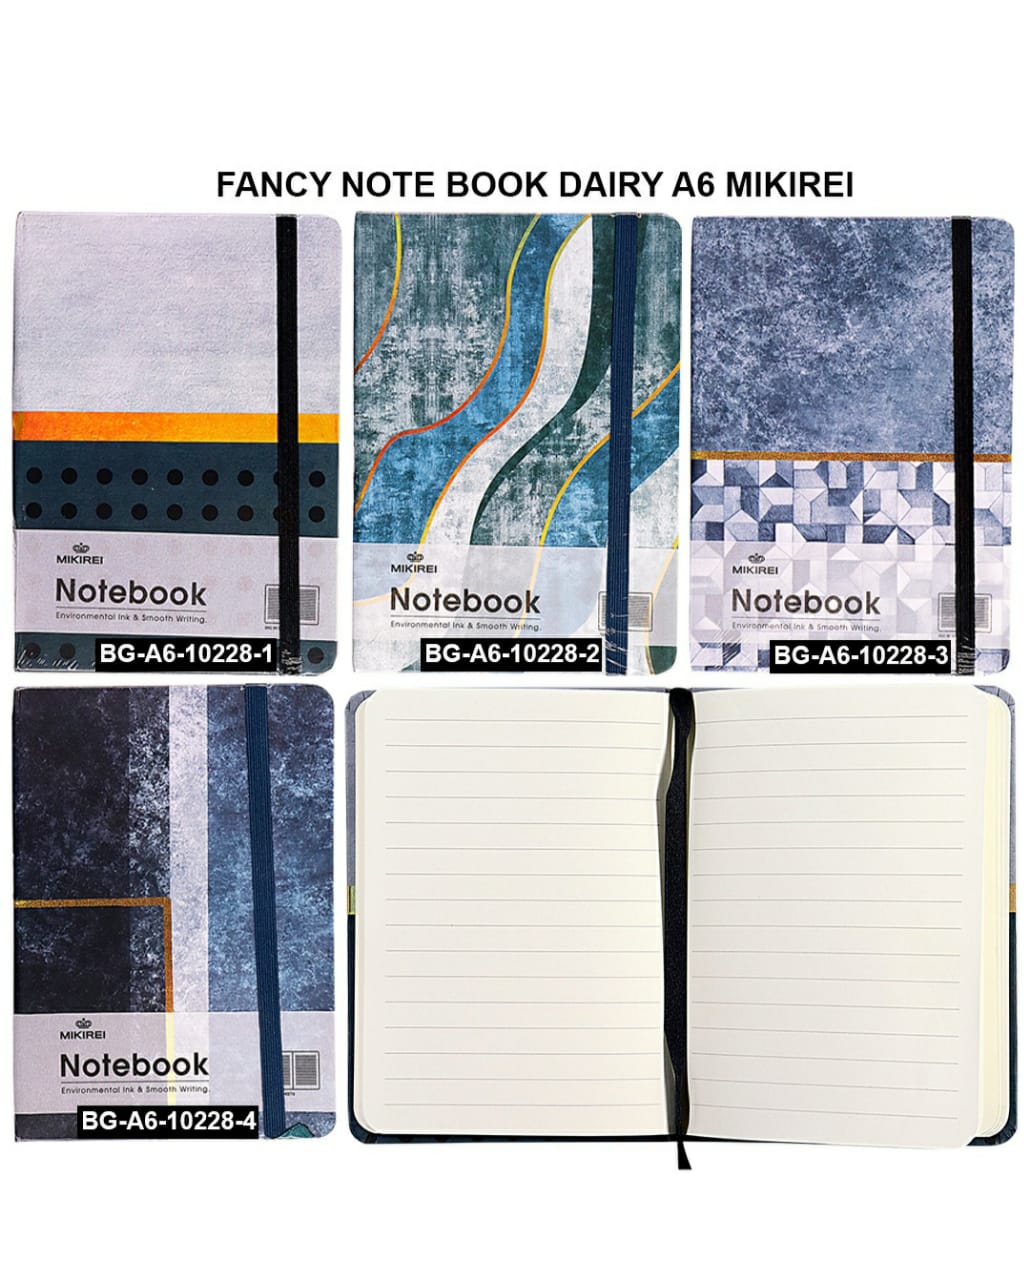 Note Book Dairy A6 Mikirei A6-10228 | INKARTO